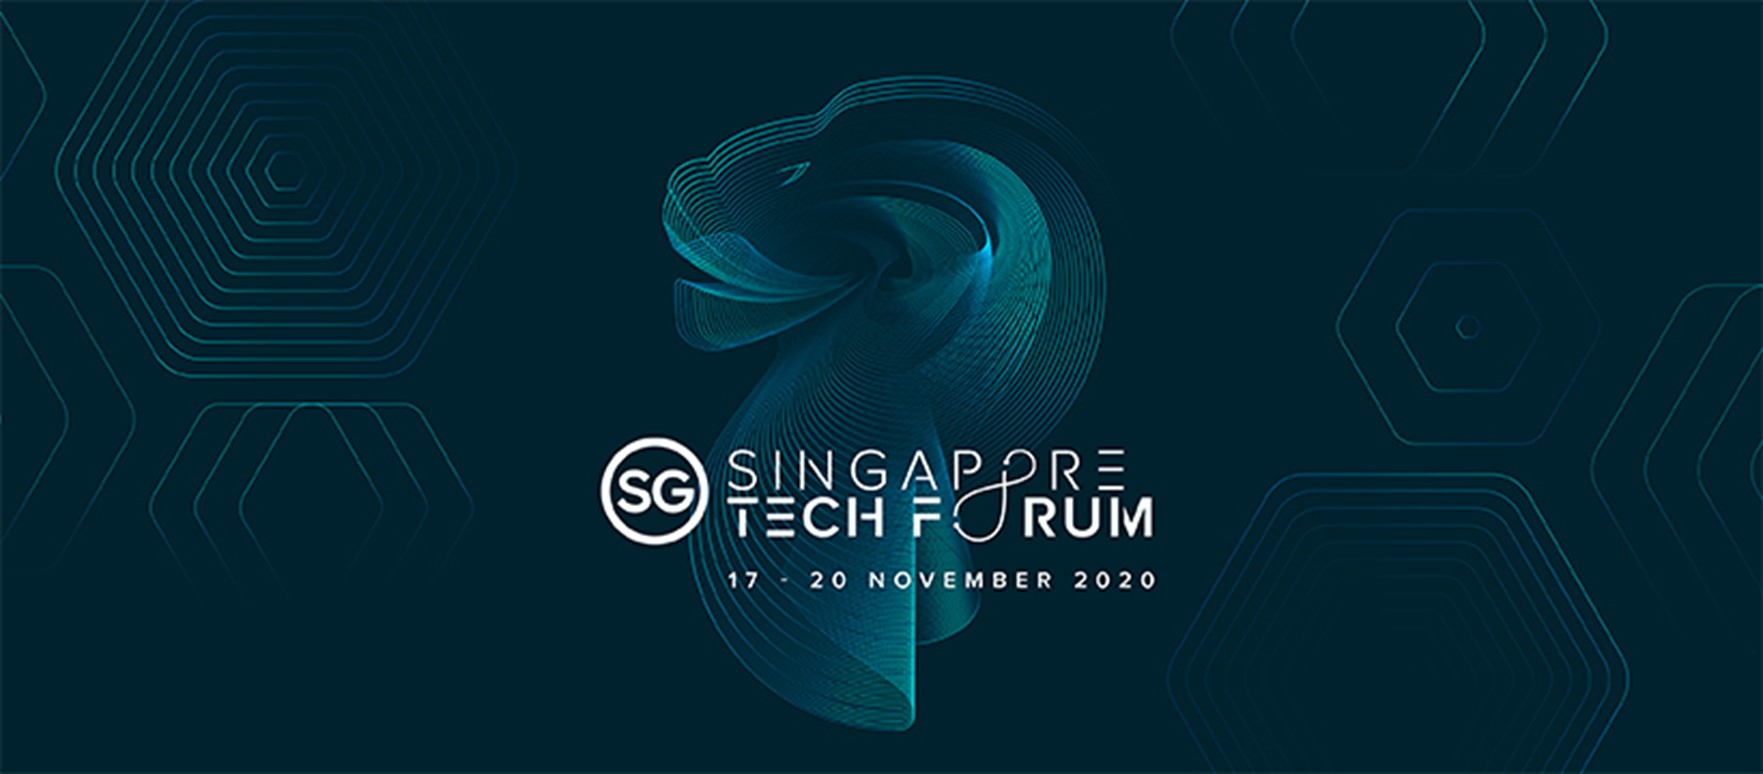 Singapore Tech Forum 2020